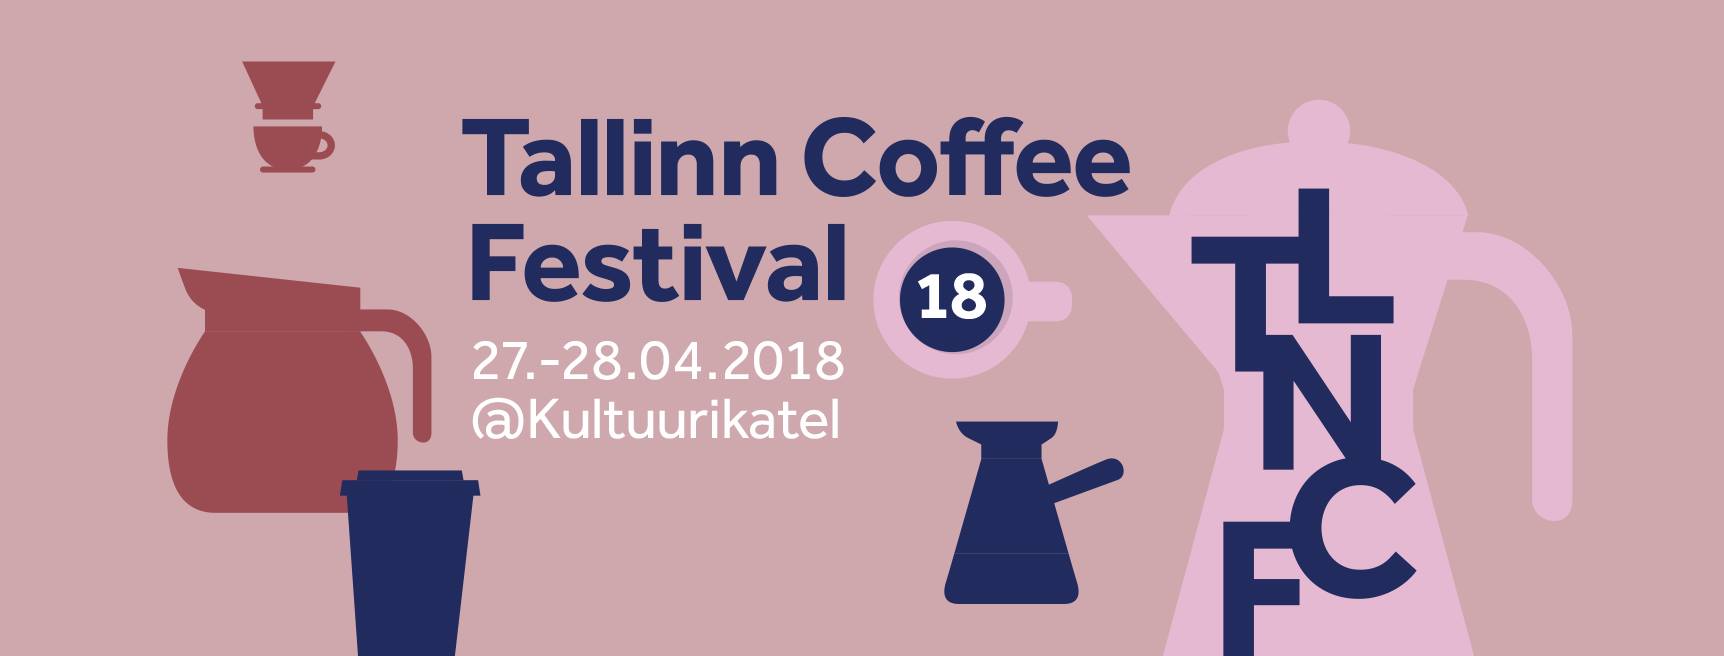 6095Tallinn Coffee Festival 2018